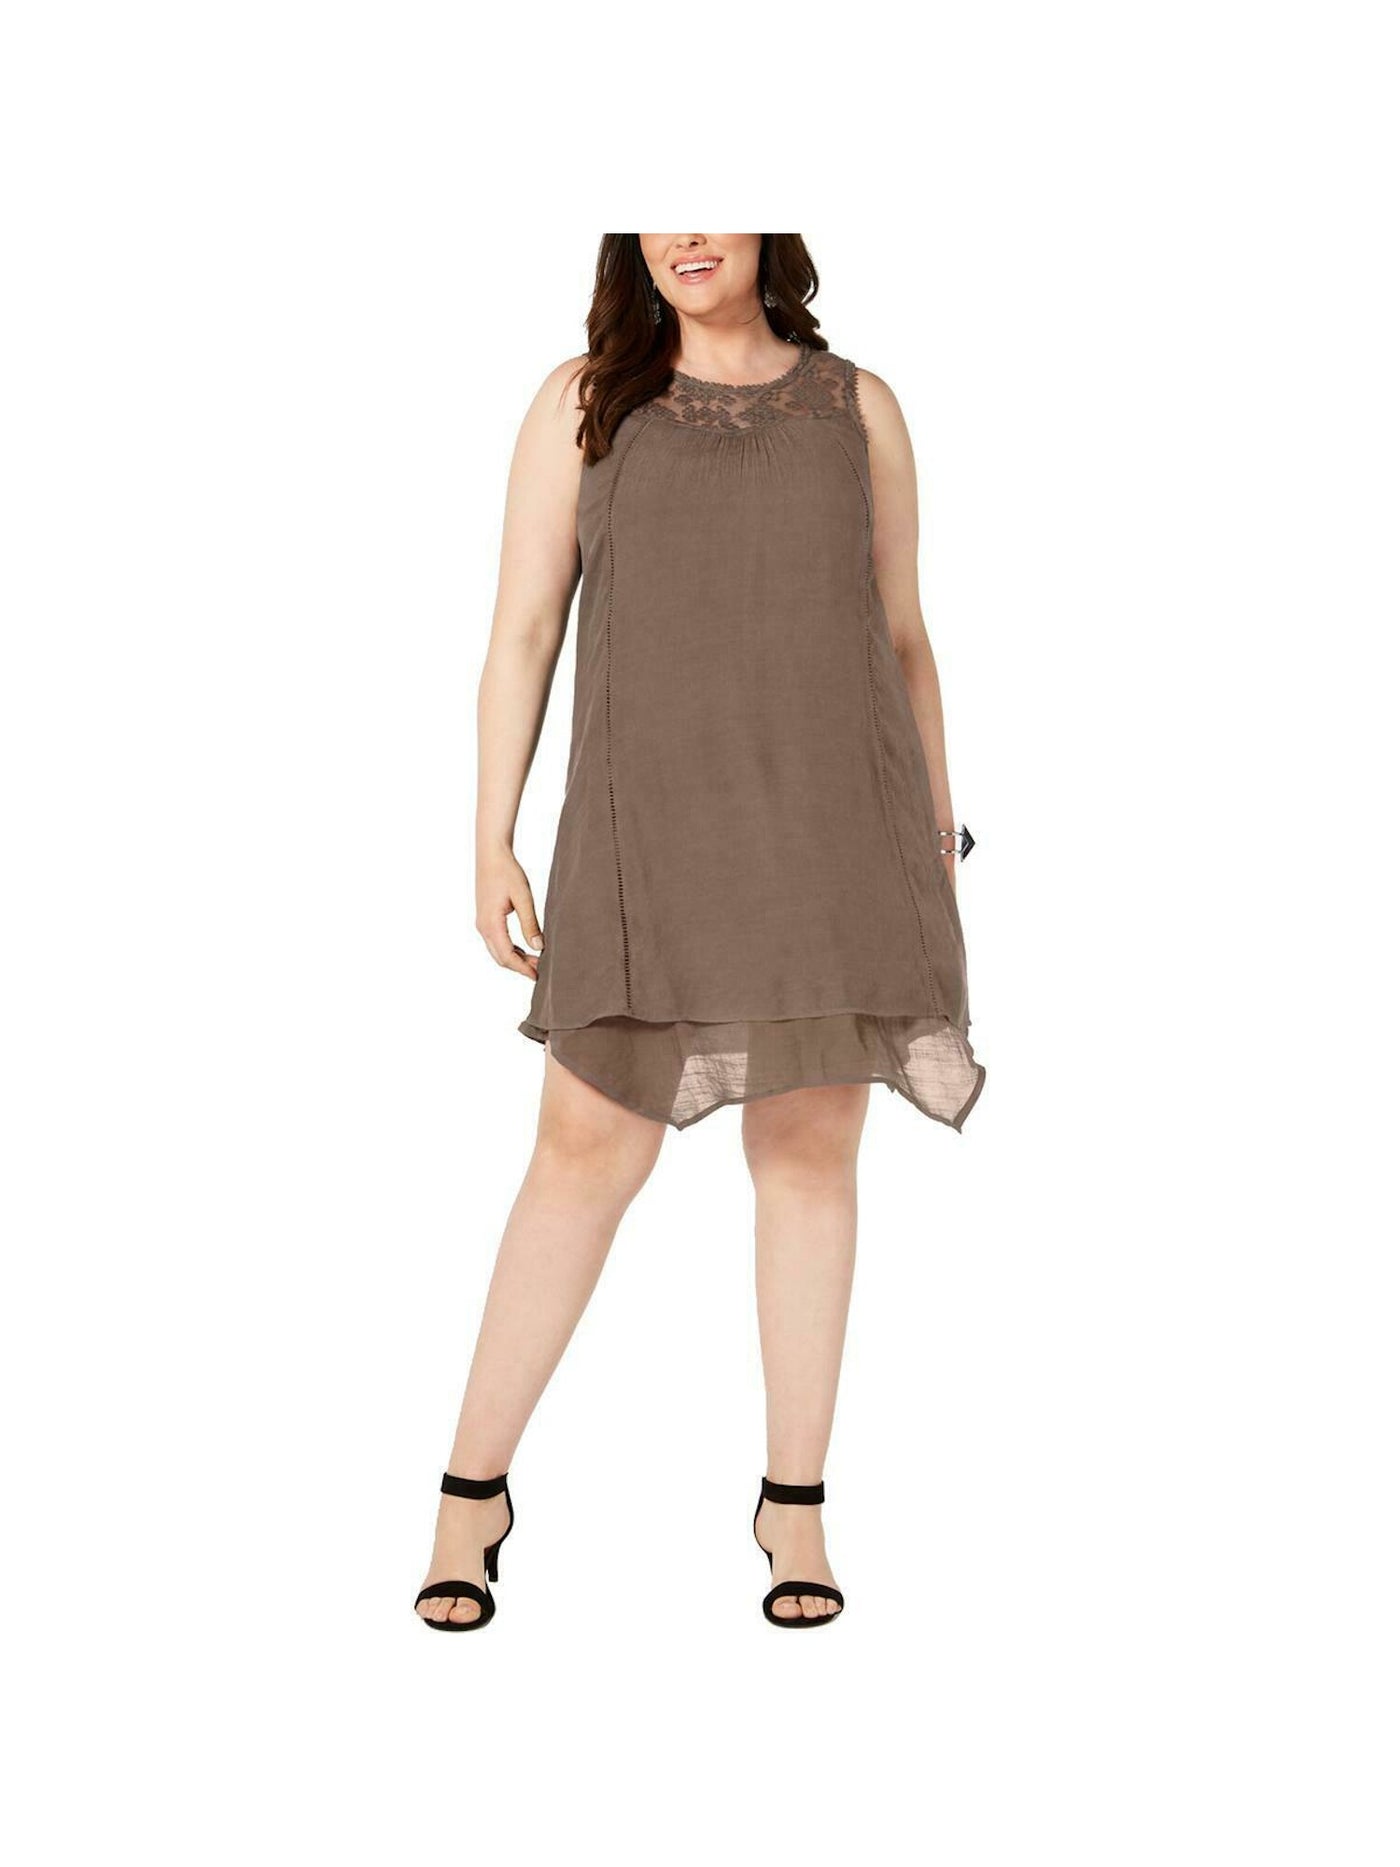 STYLE & COMPANY Womens Brown Lace  Pom Pom Sleeveless Jewel Neck Above The Knee Shift Handkerchief Dress S